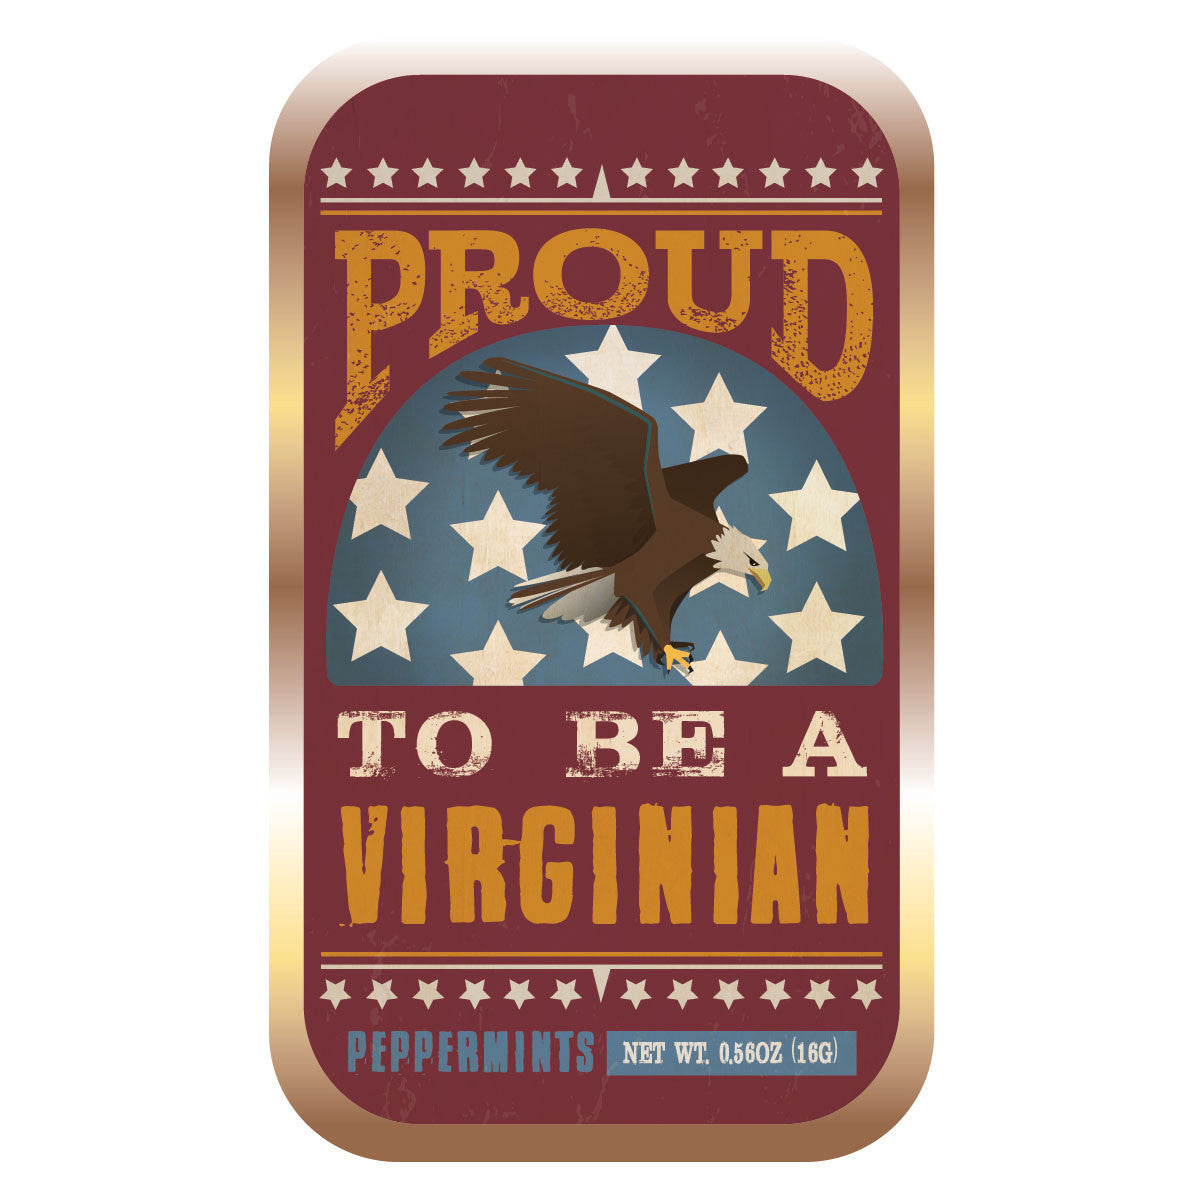 Proud Virginia - 1291S